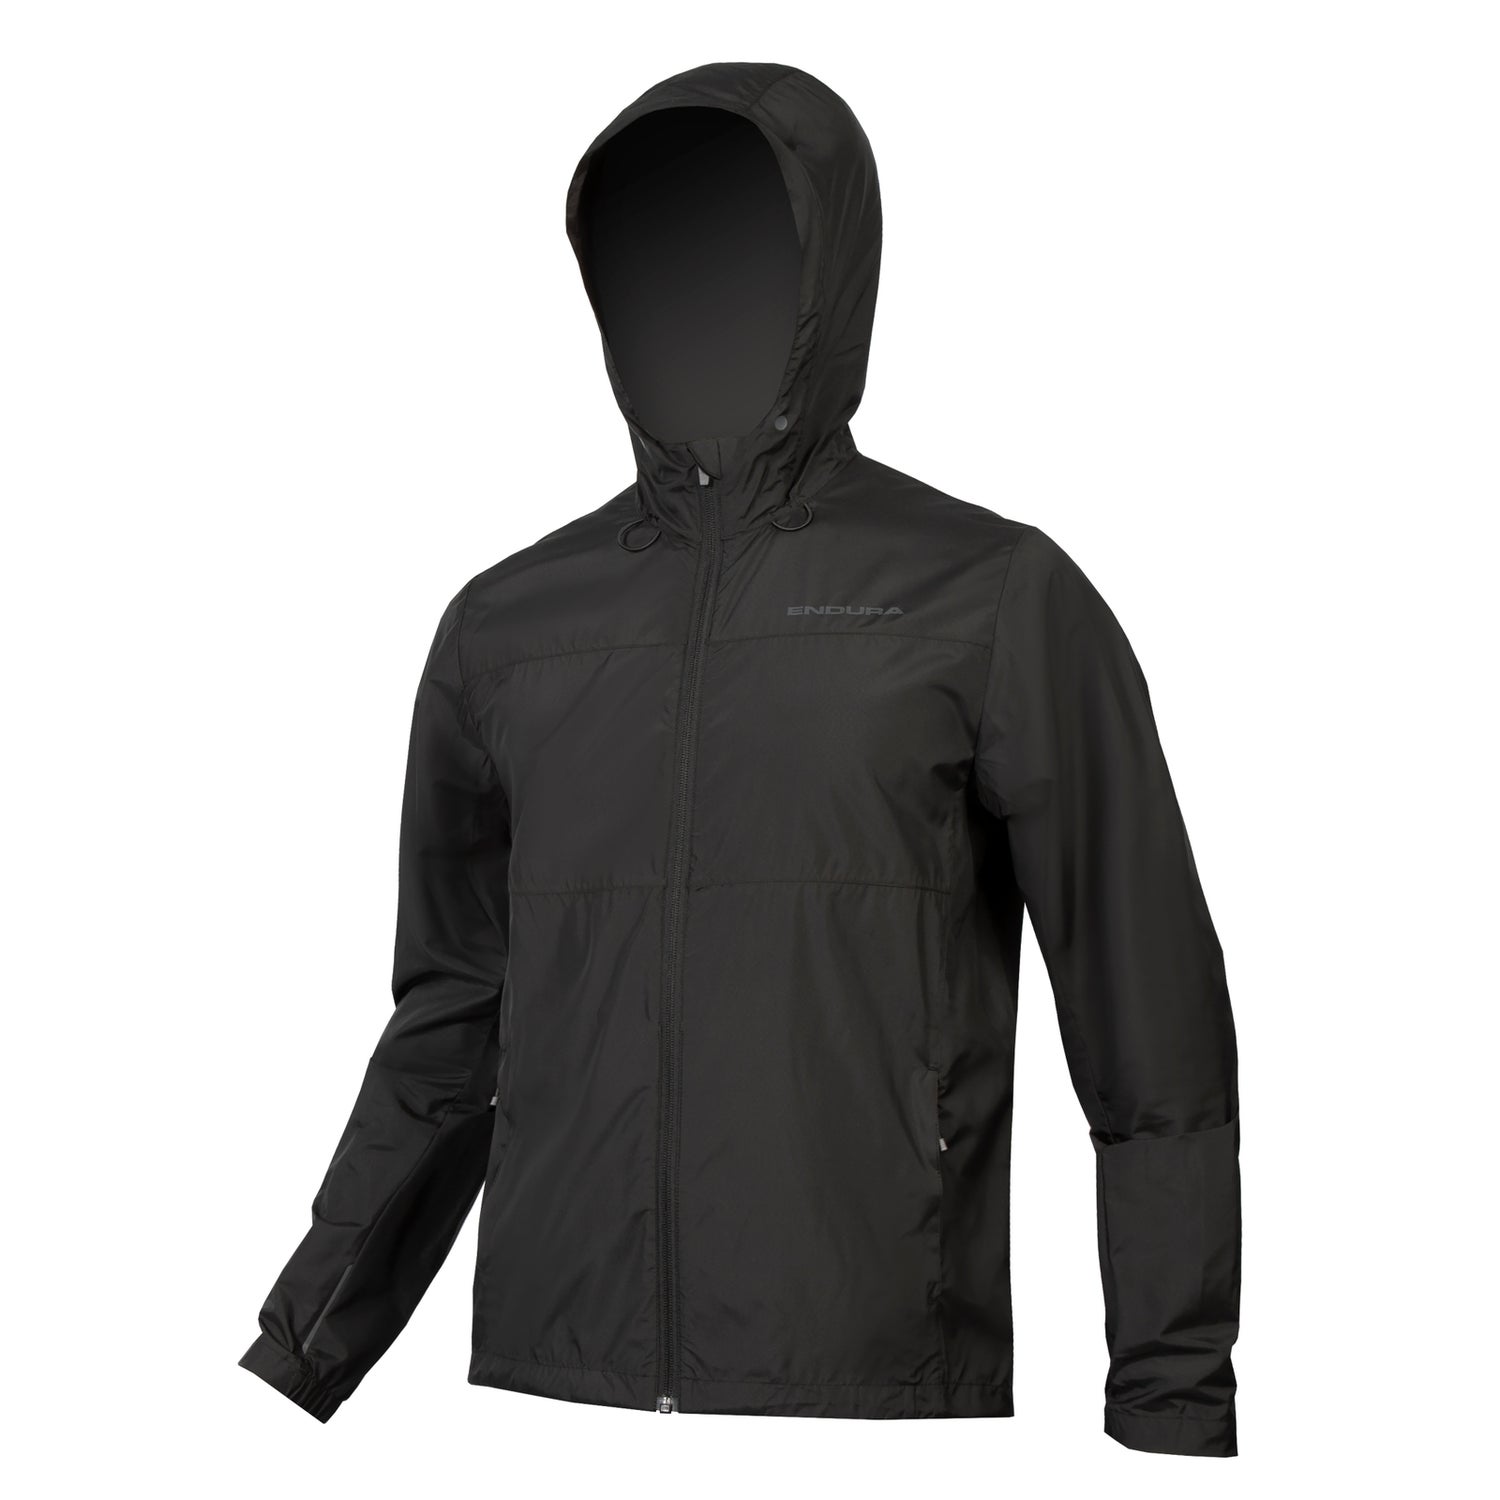 Men's Hummvee Windproof Shell Jacket - Black - XXXL